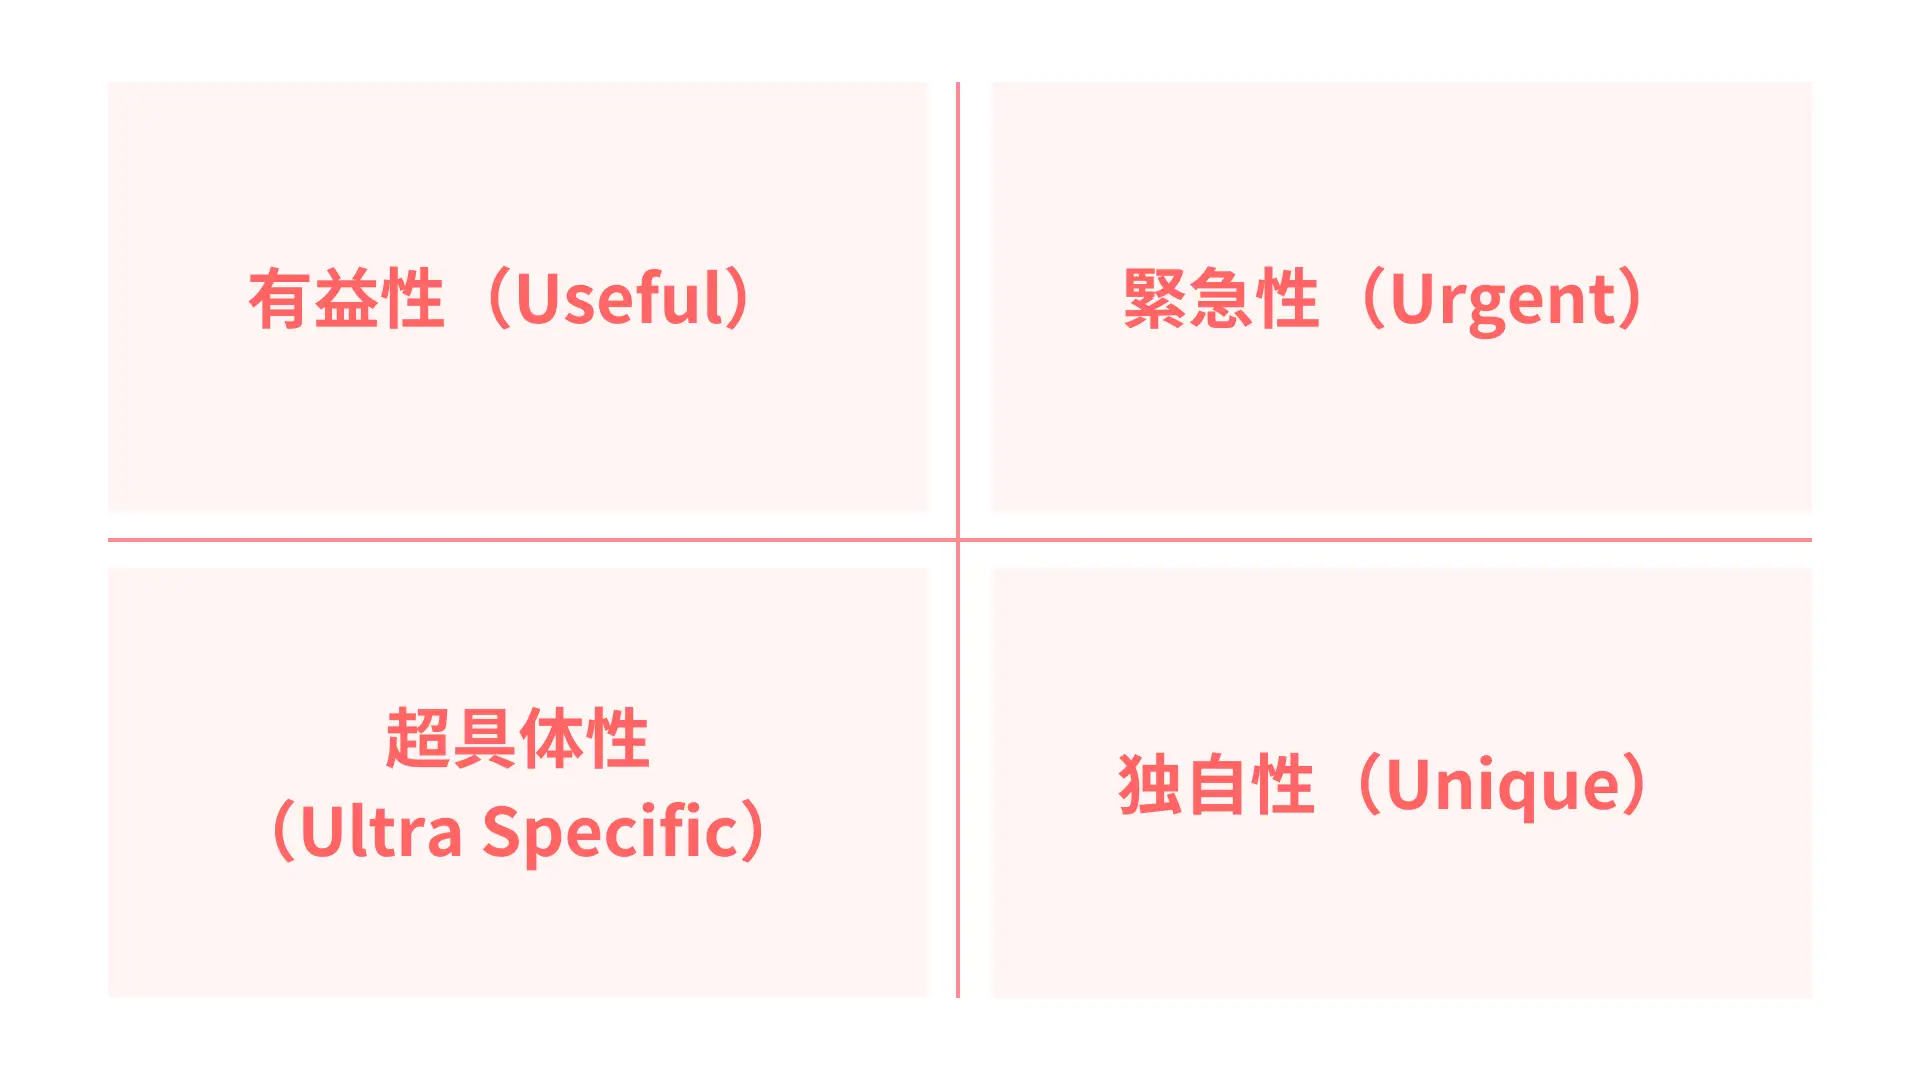 「Useful（有益性）」「Urgent（緊急性）」「Ultra Specific（具体性）」「Unique（独自性）」の頭文字をとった「4Uの原則」